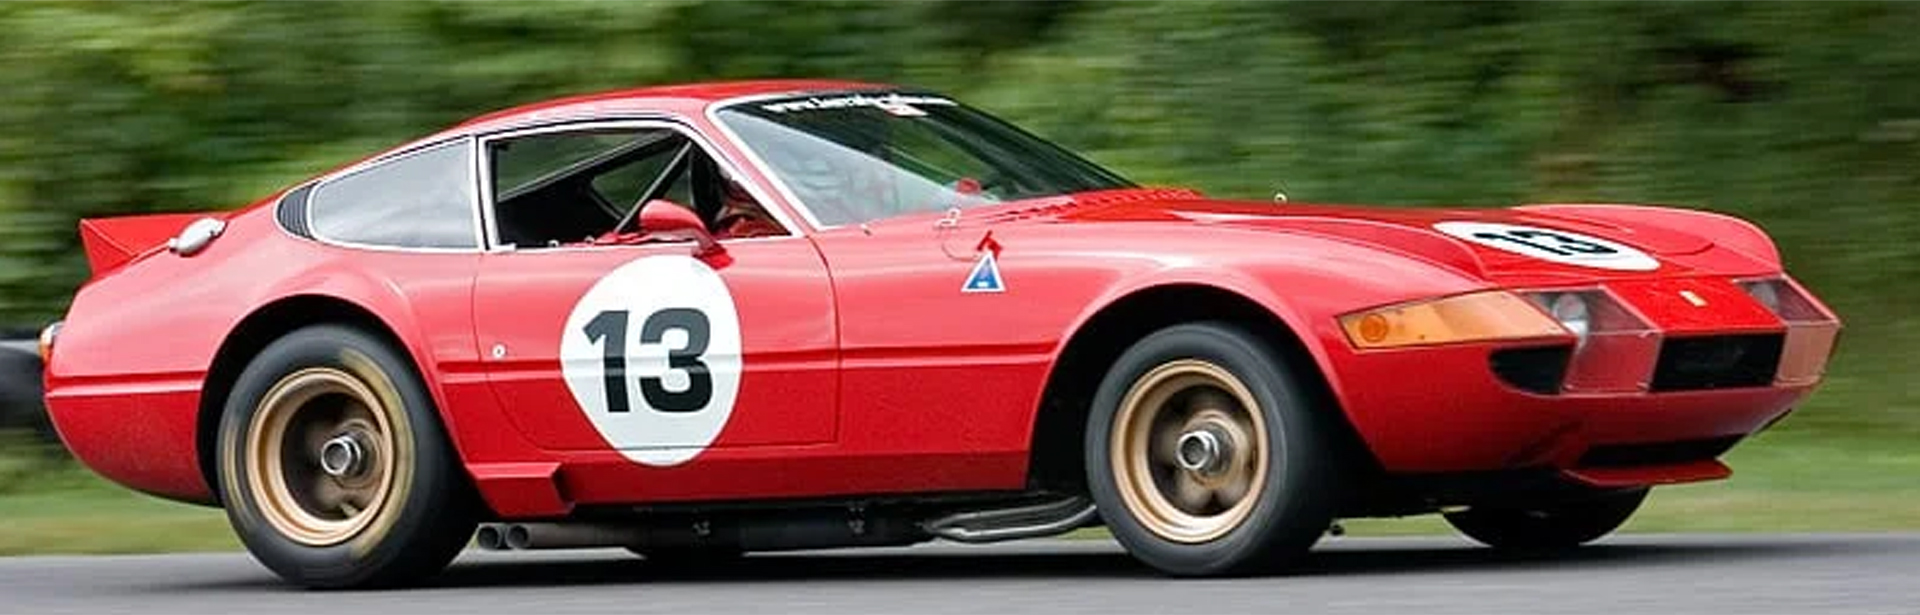 Sheehans Ferrari 365gtb4c Competition Daytona